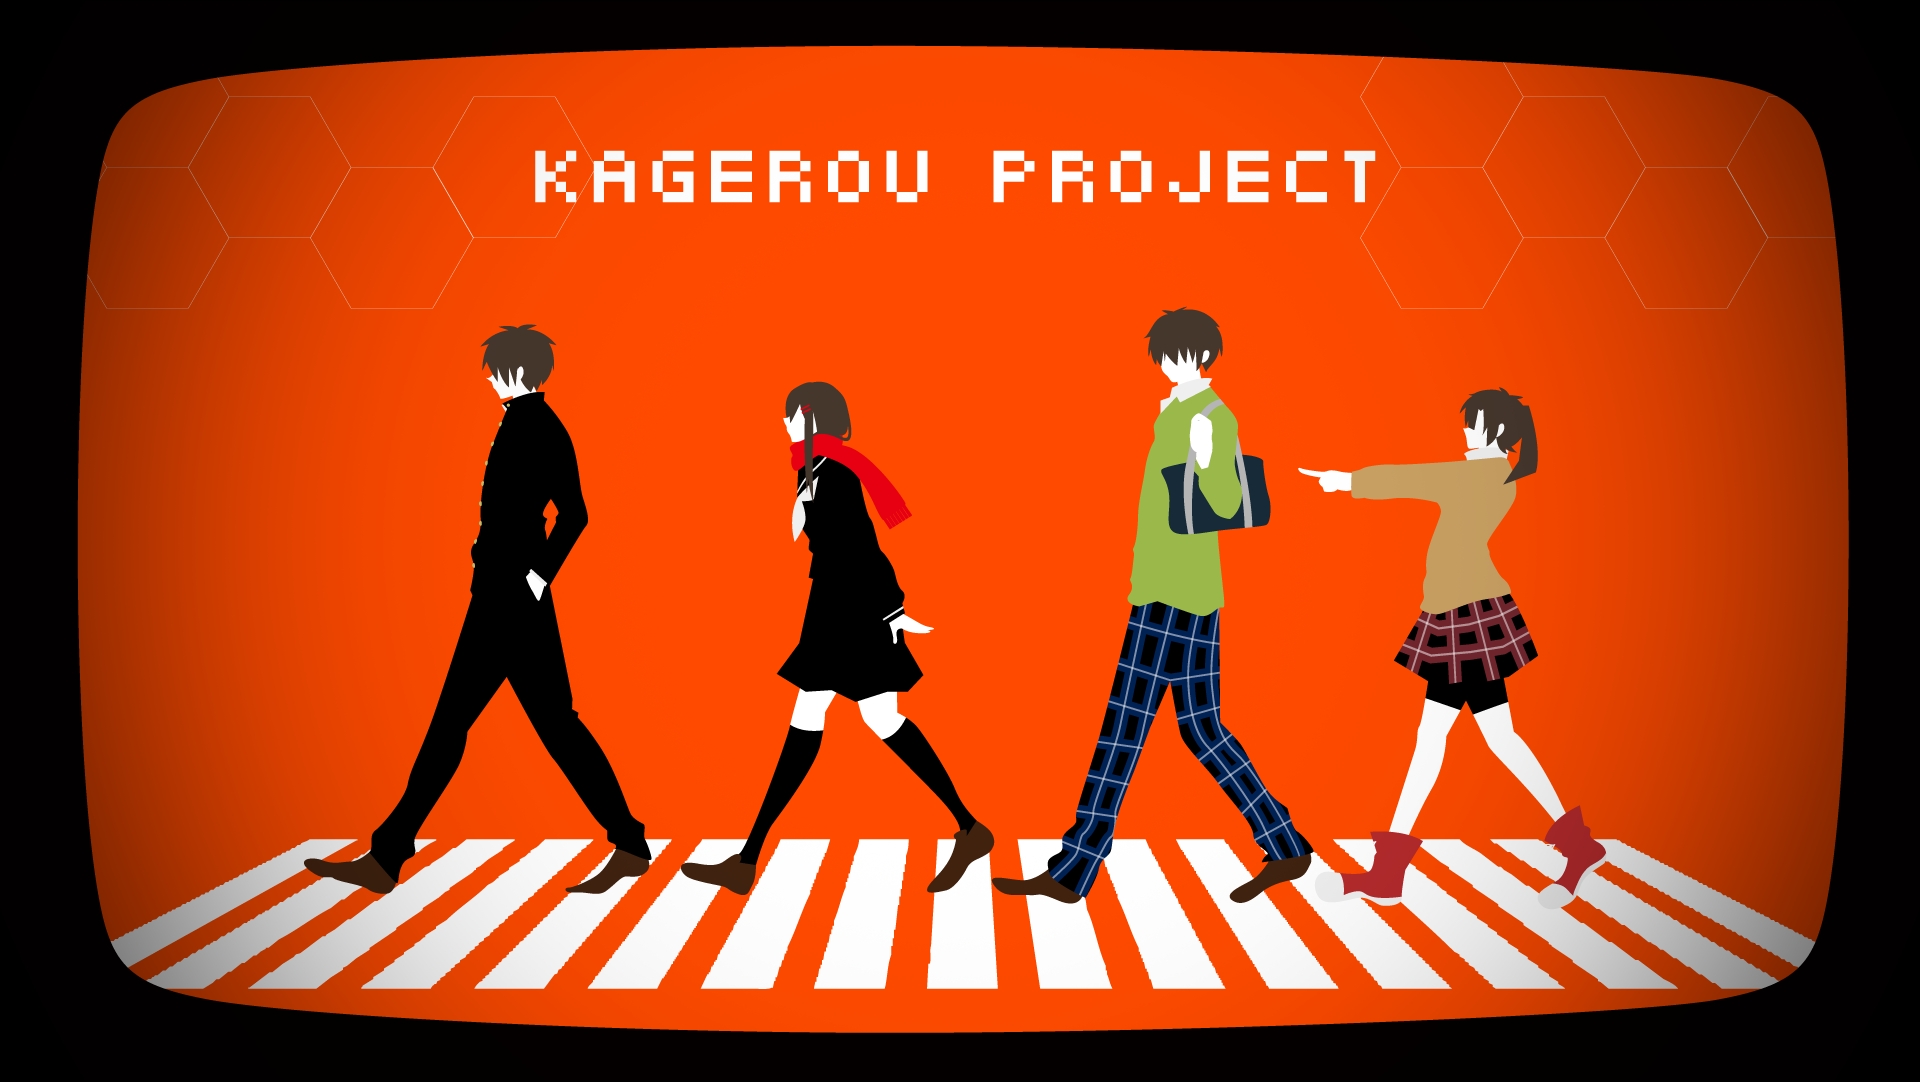 kagerou, Project Wallpaper